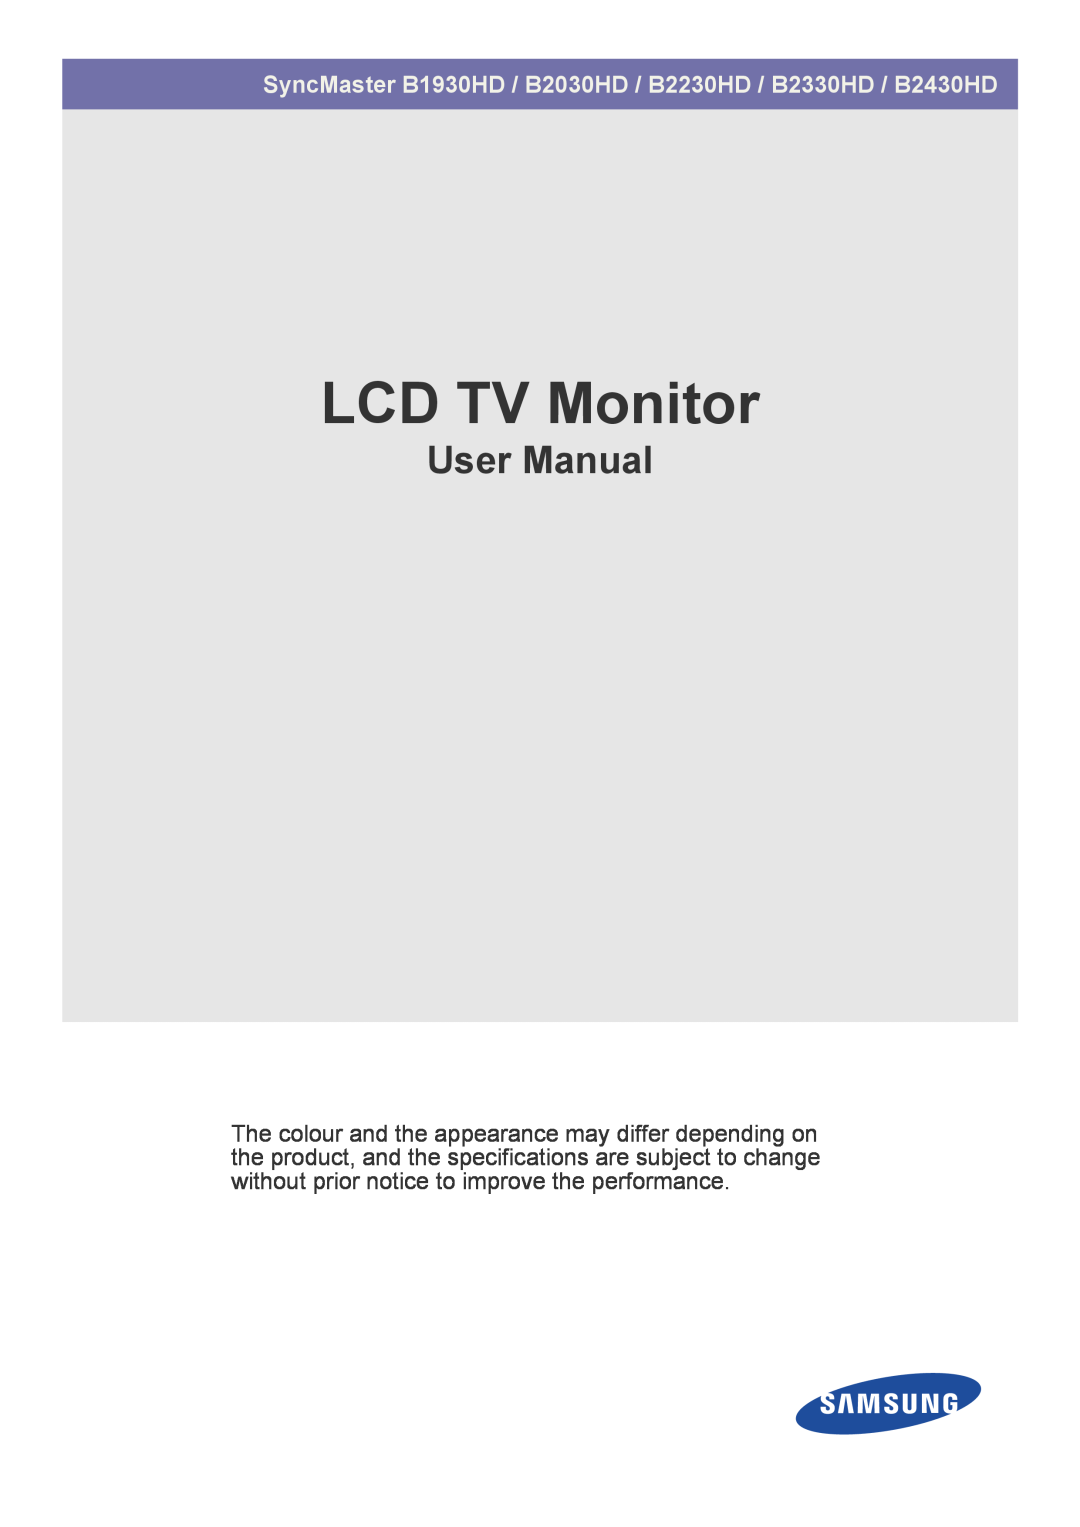 Samsung user manual LCD TV Monitor, User Manual, SyncMaster B1930HD / B2030HD / B2230HD / B2330HD / B2430HD 